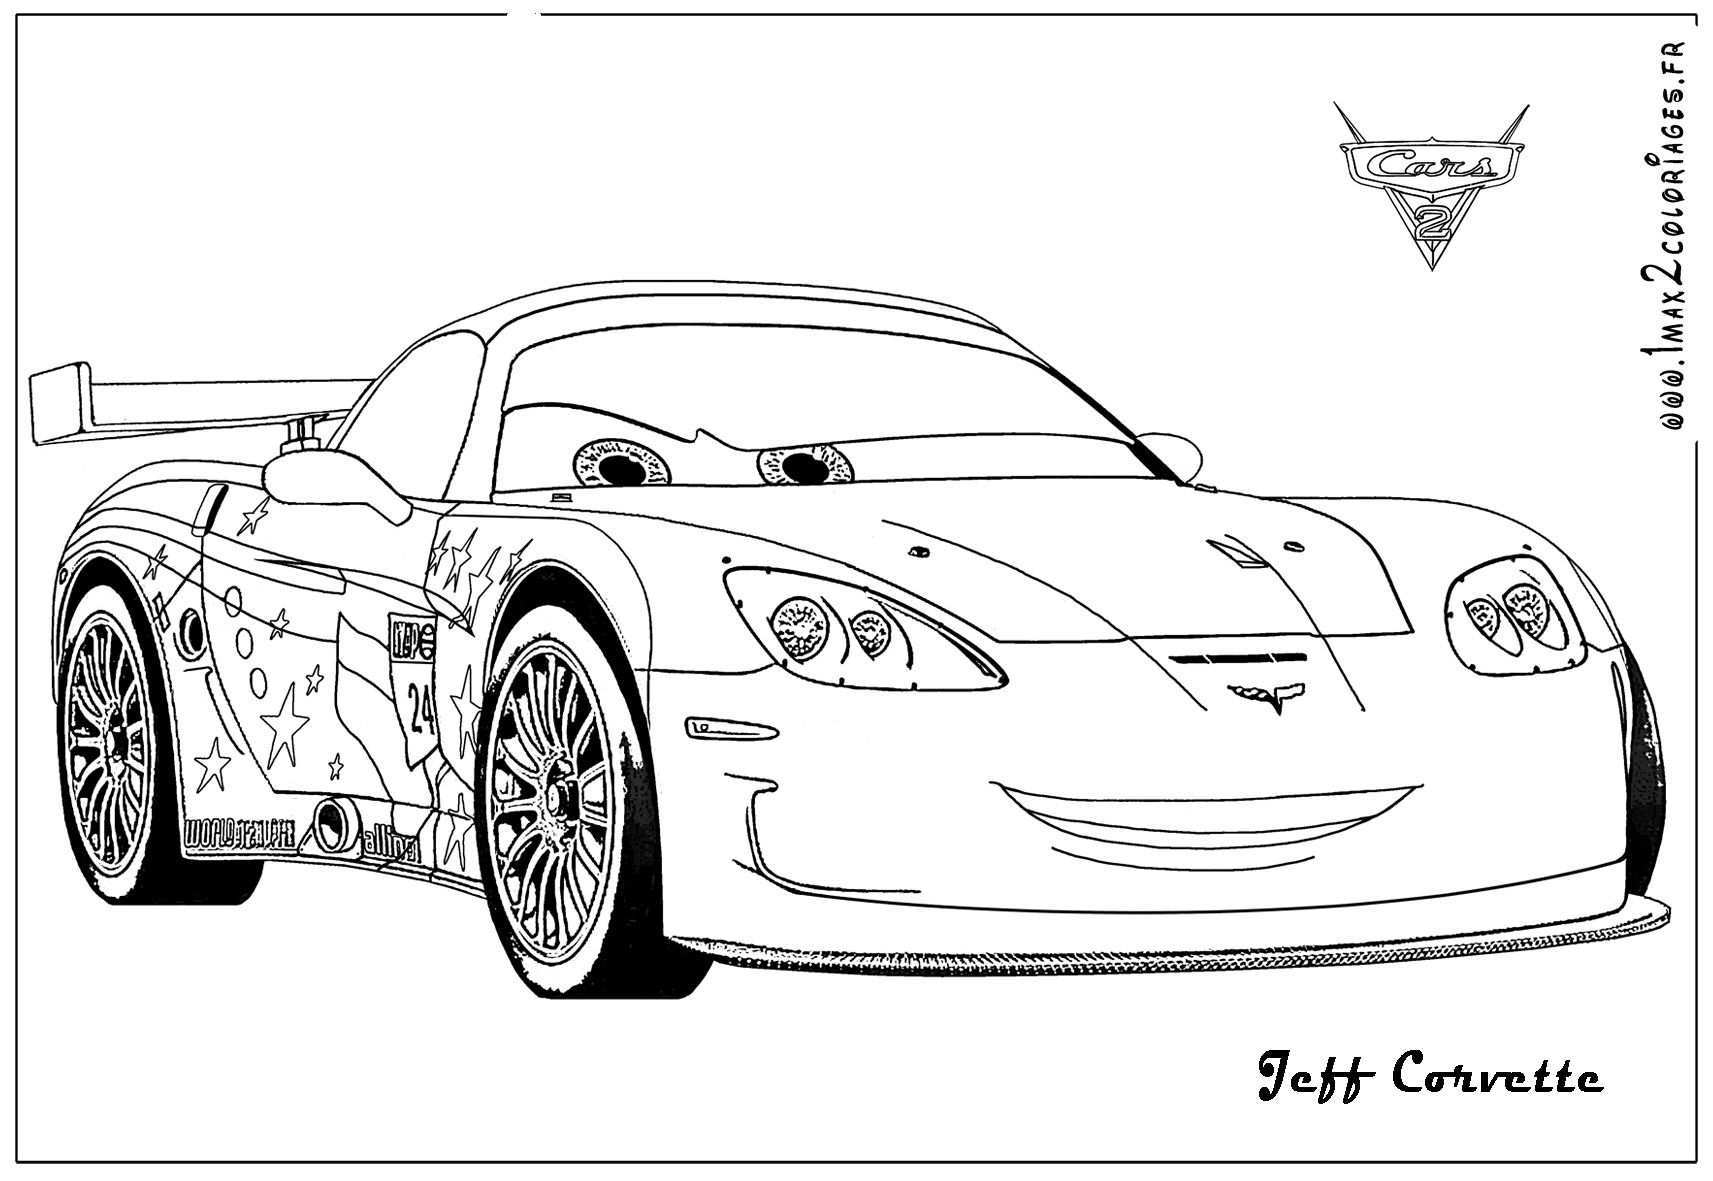 Cars 2 Jeff Corvette Coloring Page Coloring Pages Cars Coloring Pages Animal Coloring Pages